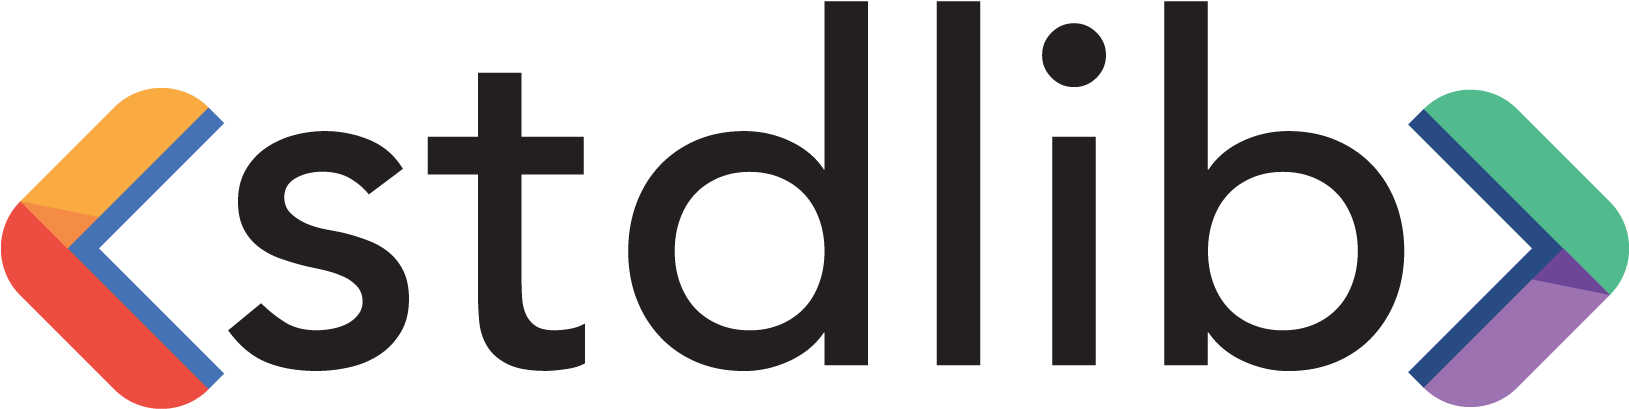 Standard Library Logo - Font (1800x512)